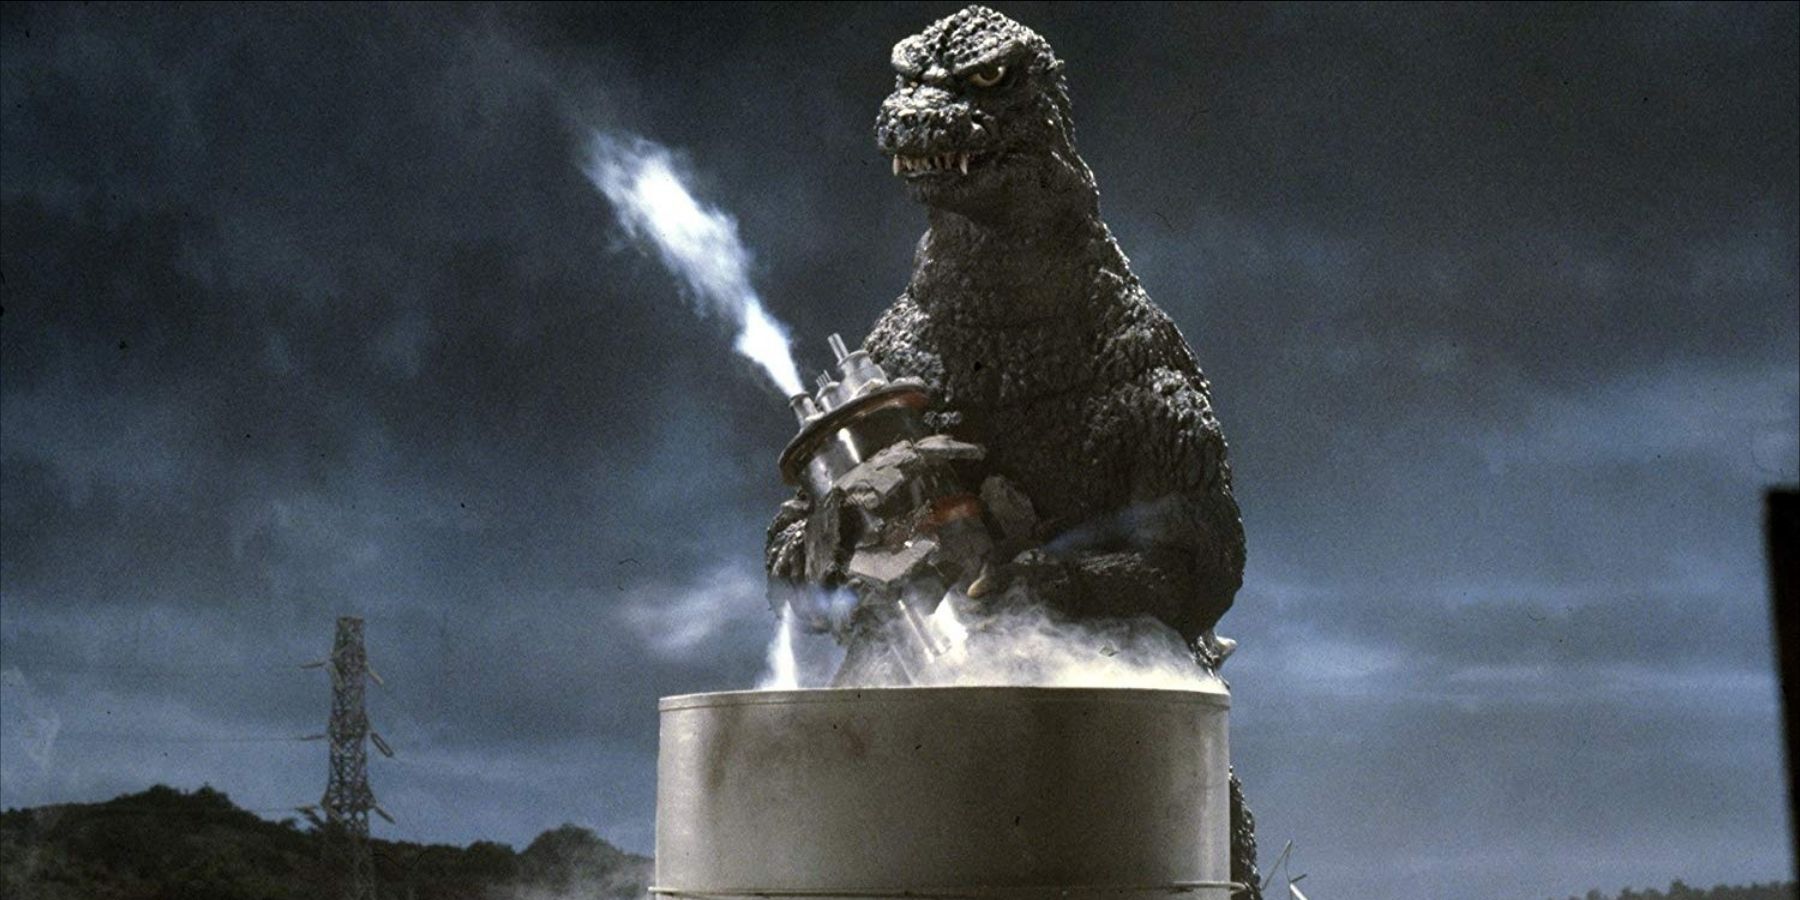 Godzilla attacking power plant in Return of Godzilla